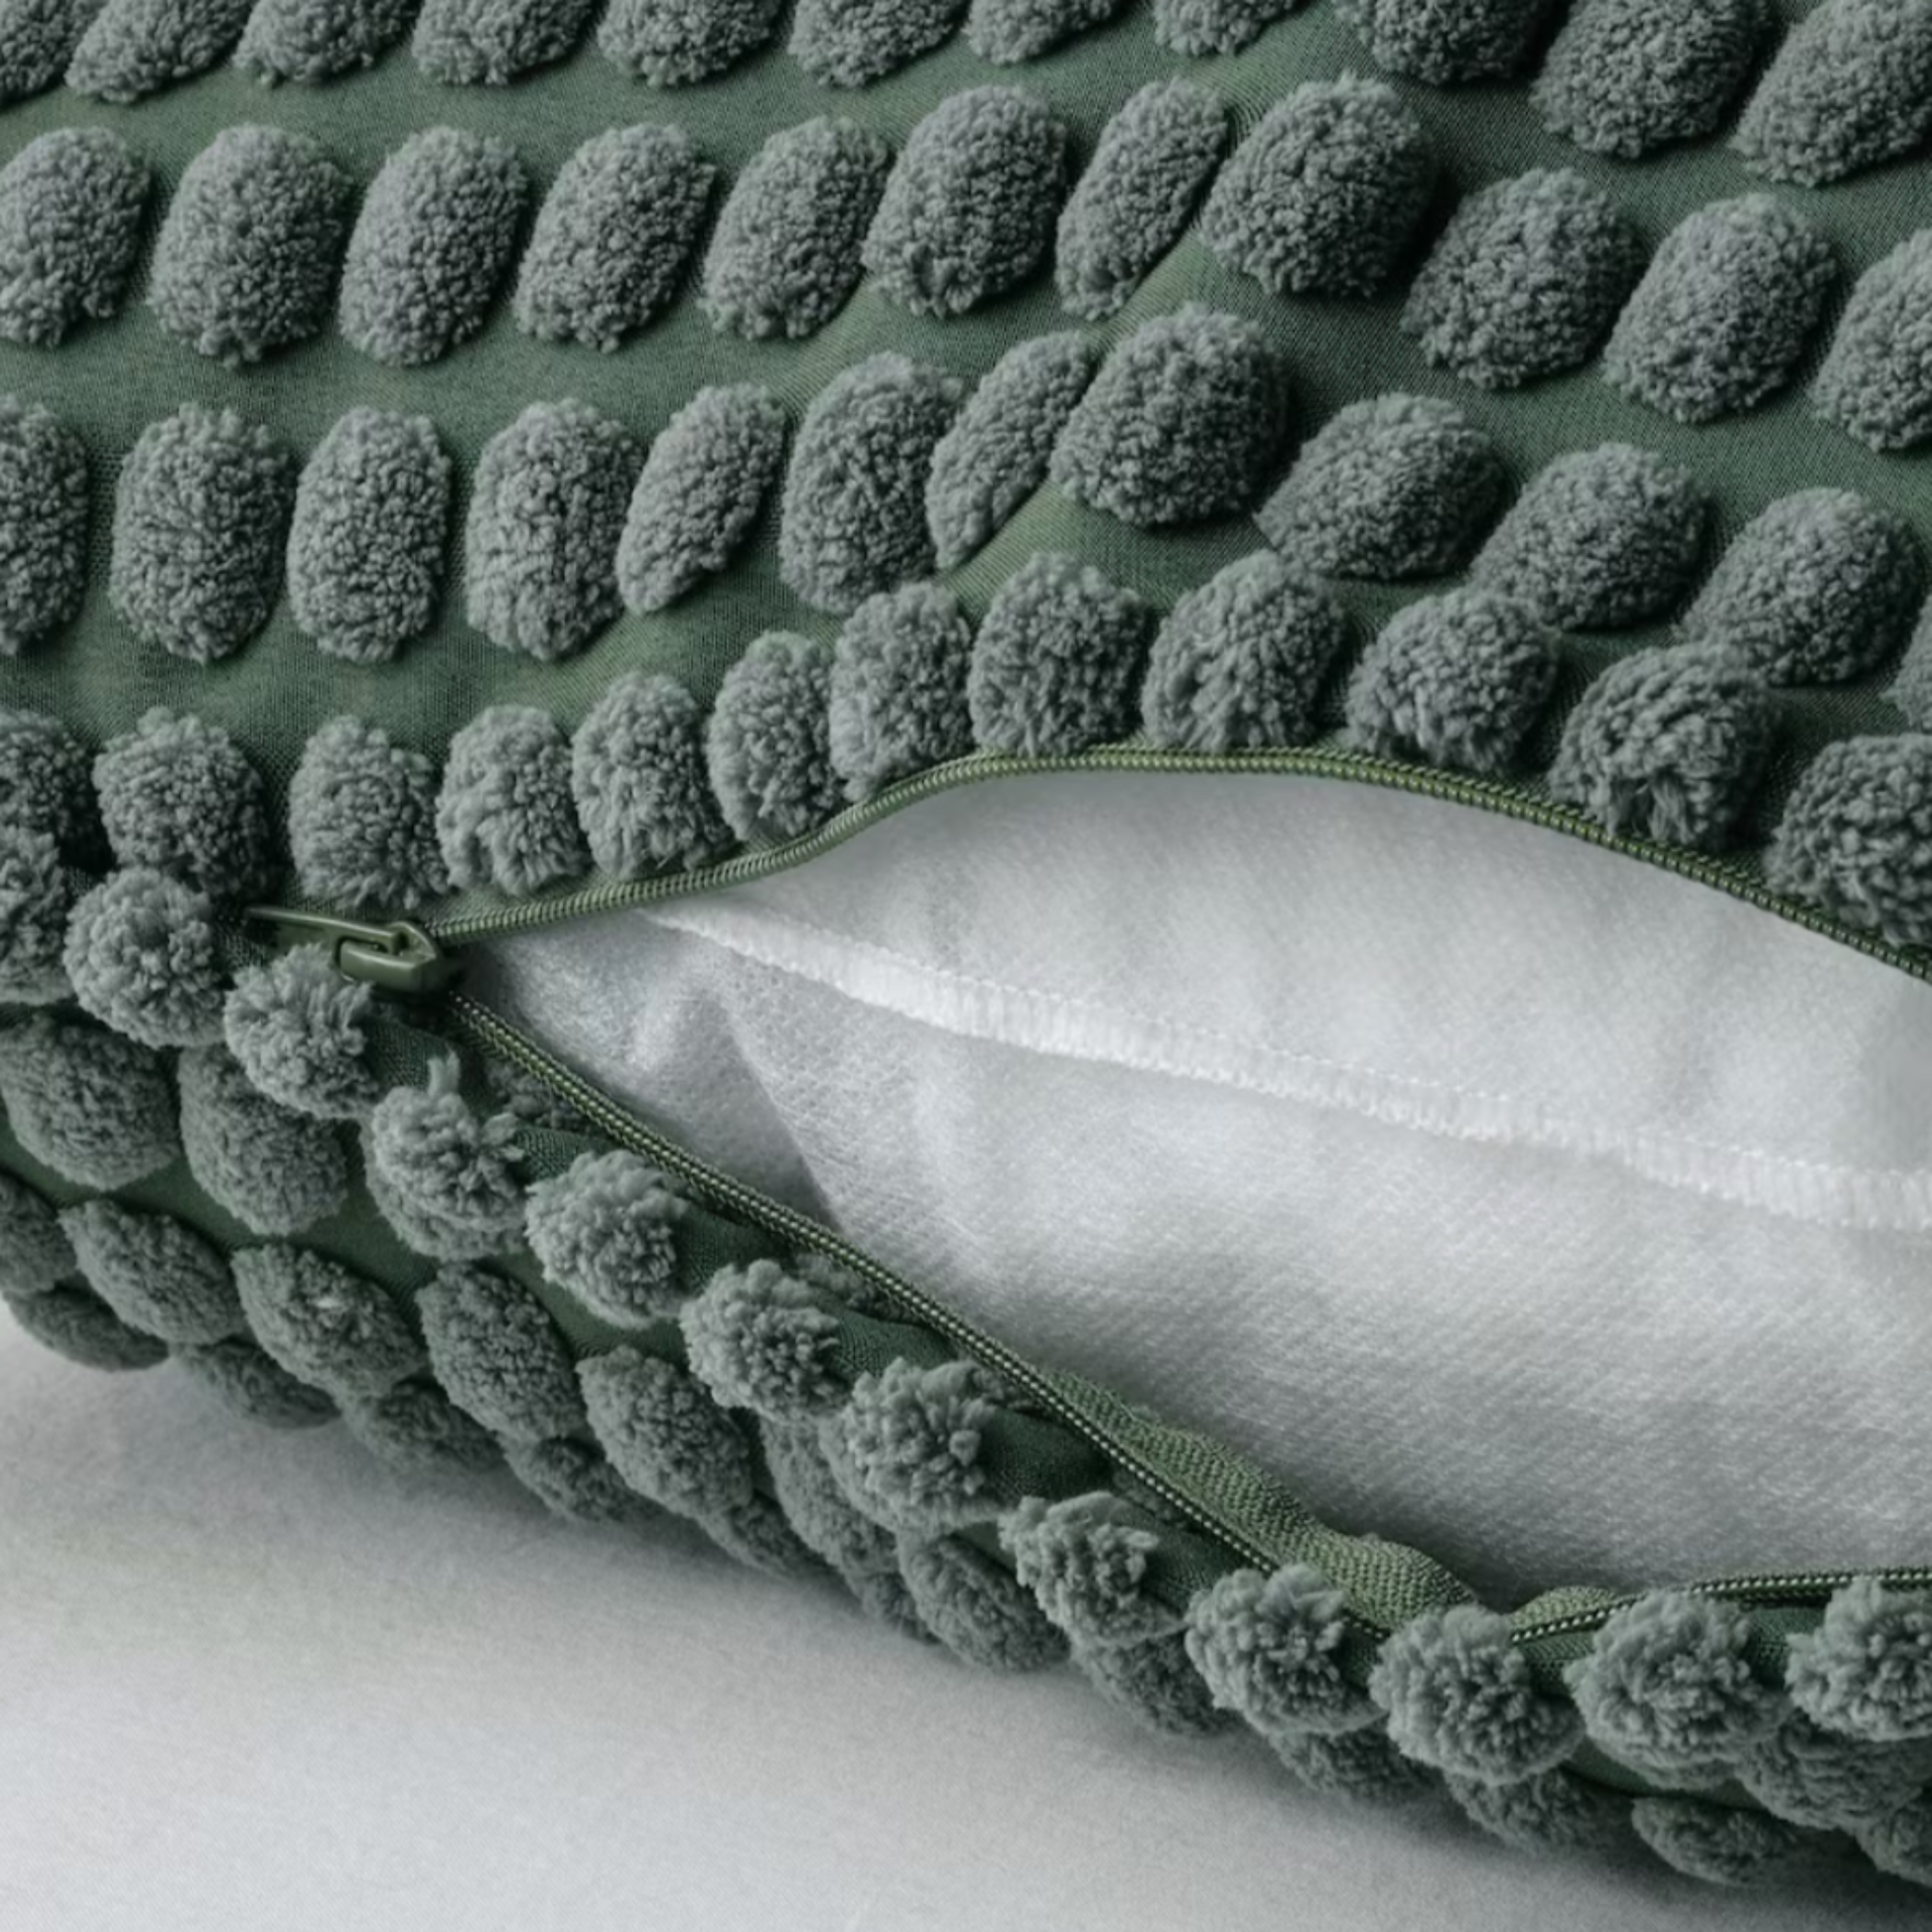 Ikea Svartpoppel Cushion Cover 50x50cm, Dark Green (8581618041119)